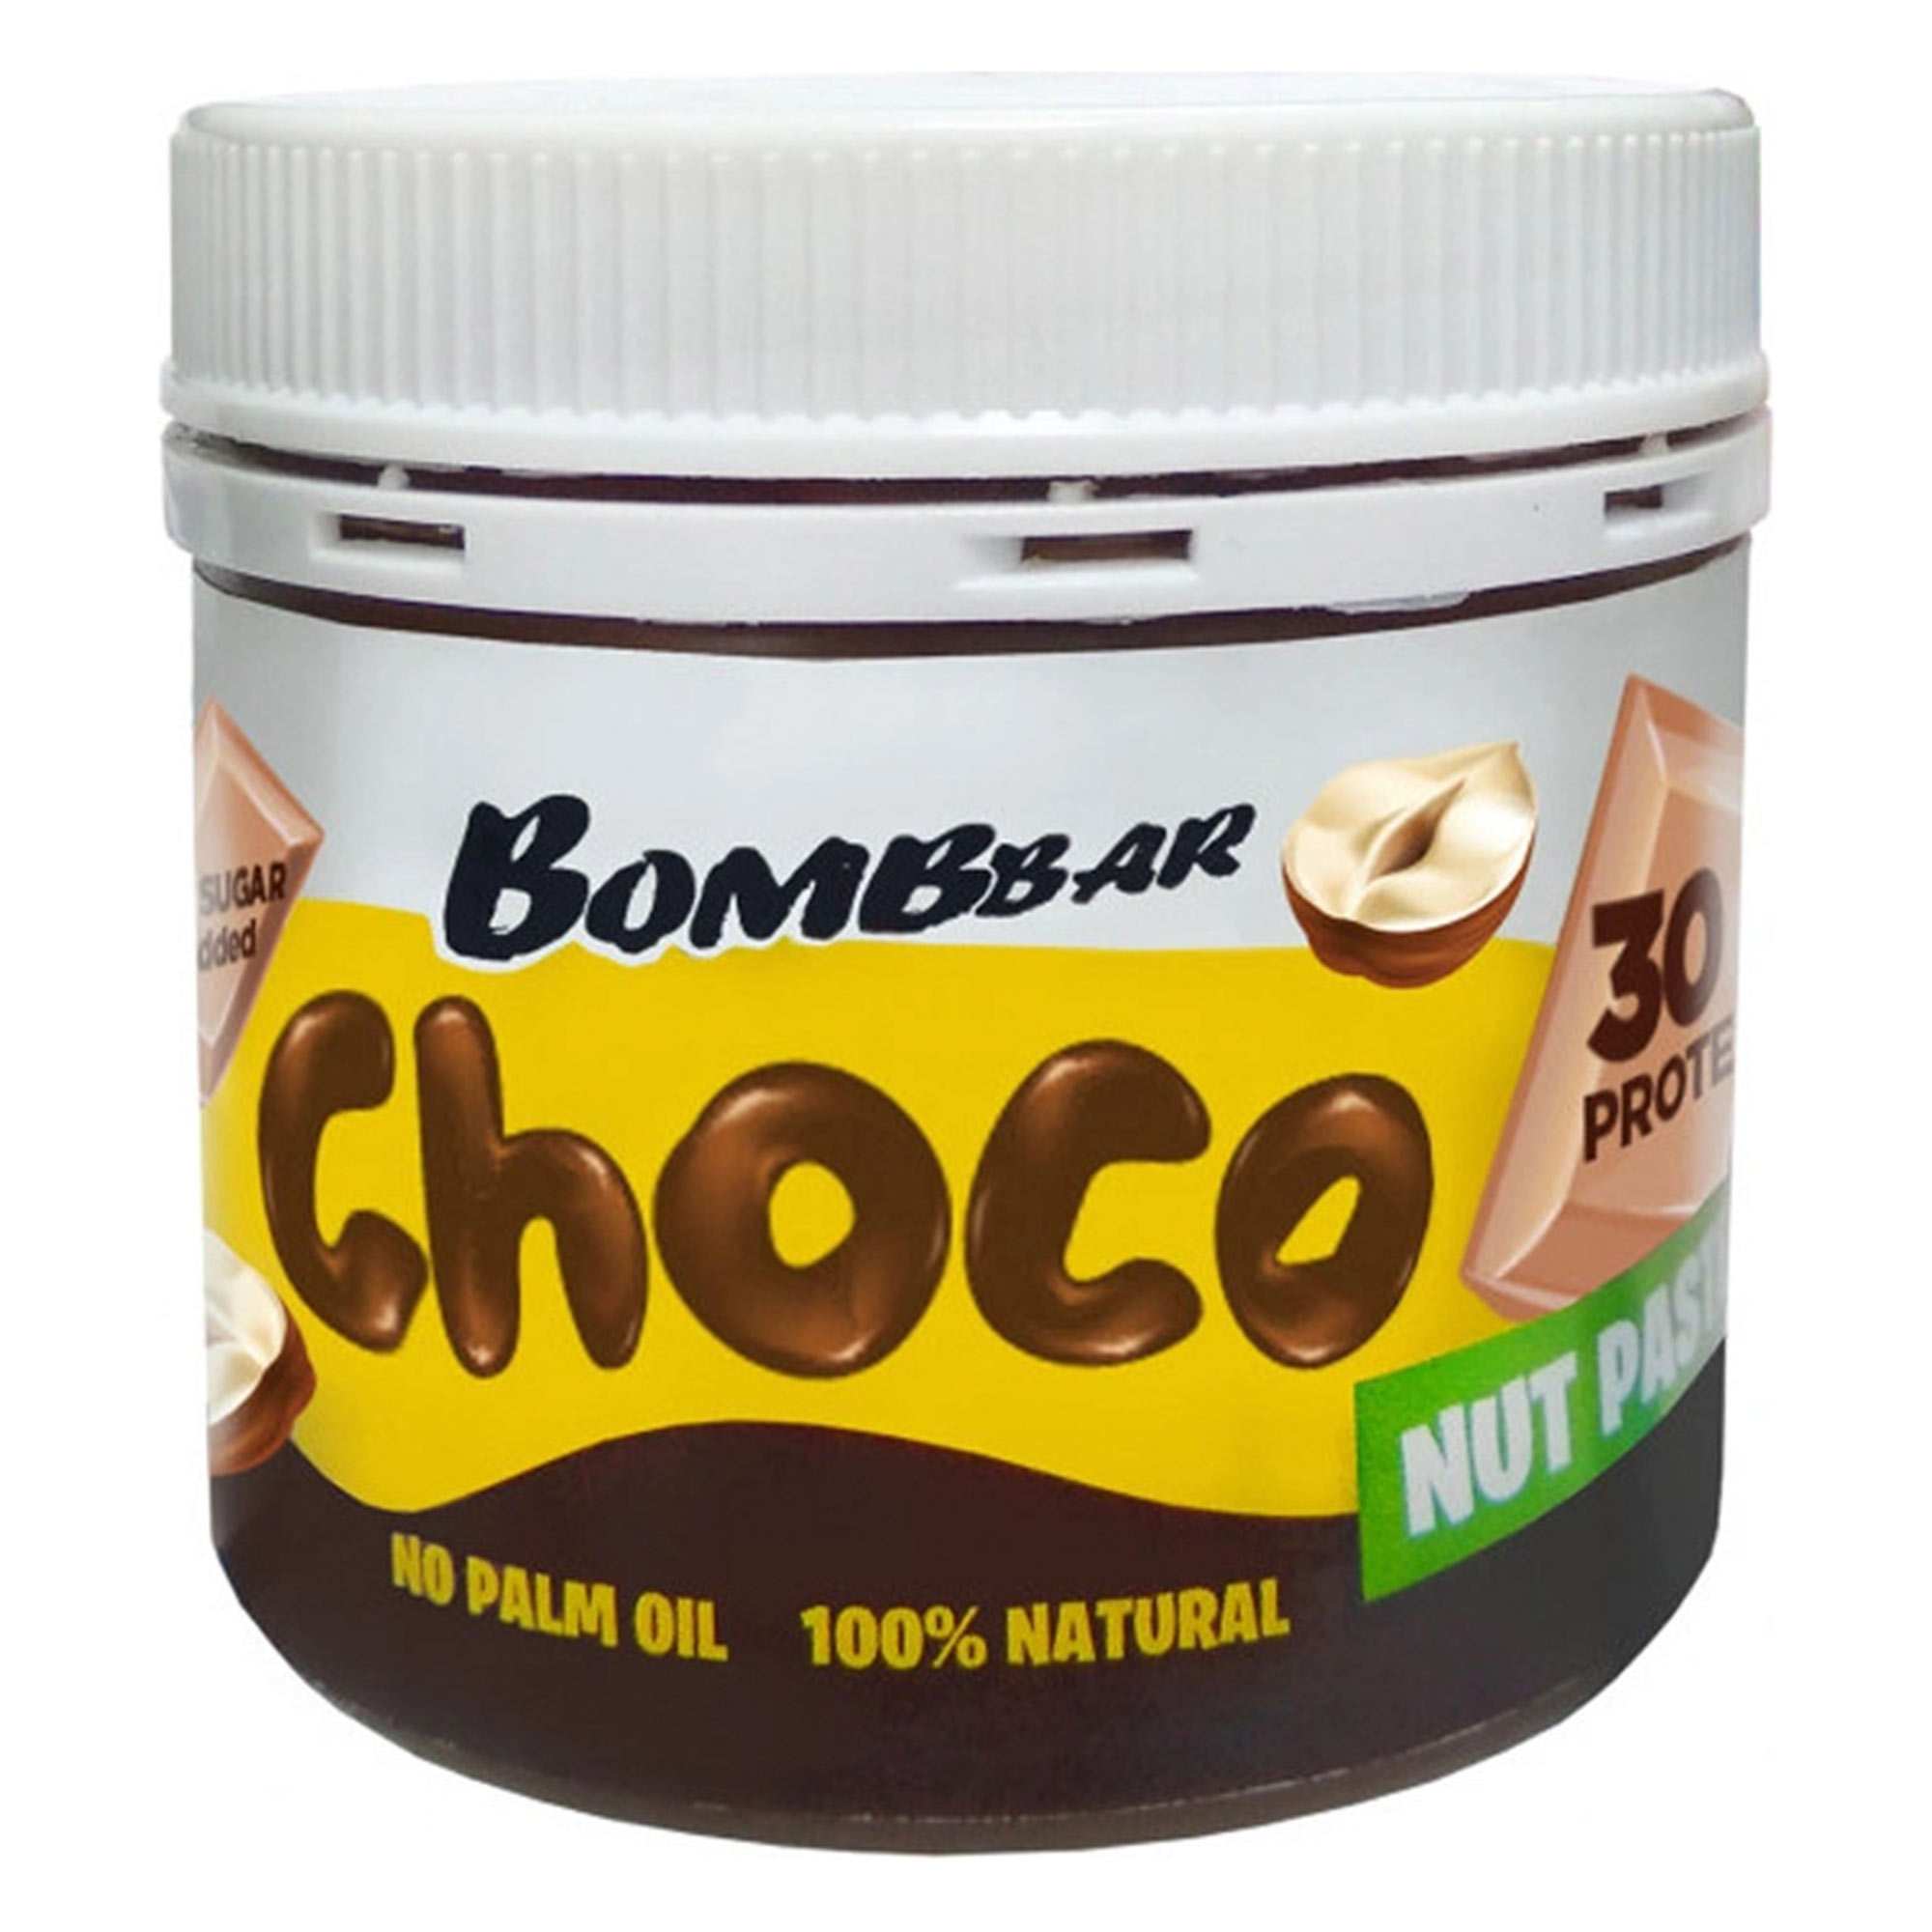 Choco паста. Шоколадная паста Бомбар. Bombbar шоколадная паста с фундуком. Шоколадная паста с фундуком Bombbar Choco nut paste. Бомбар паста шоколадная с фундуком.